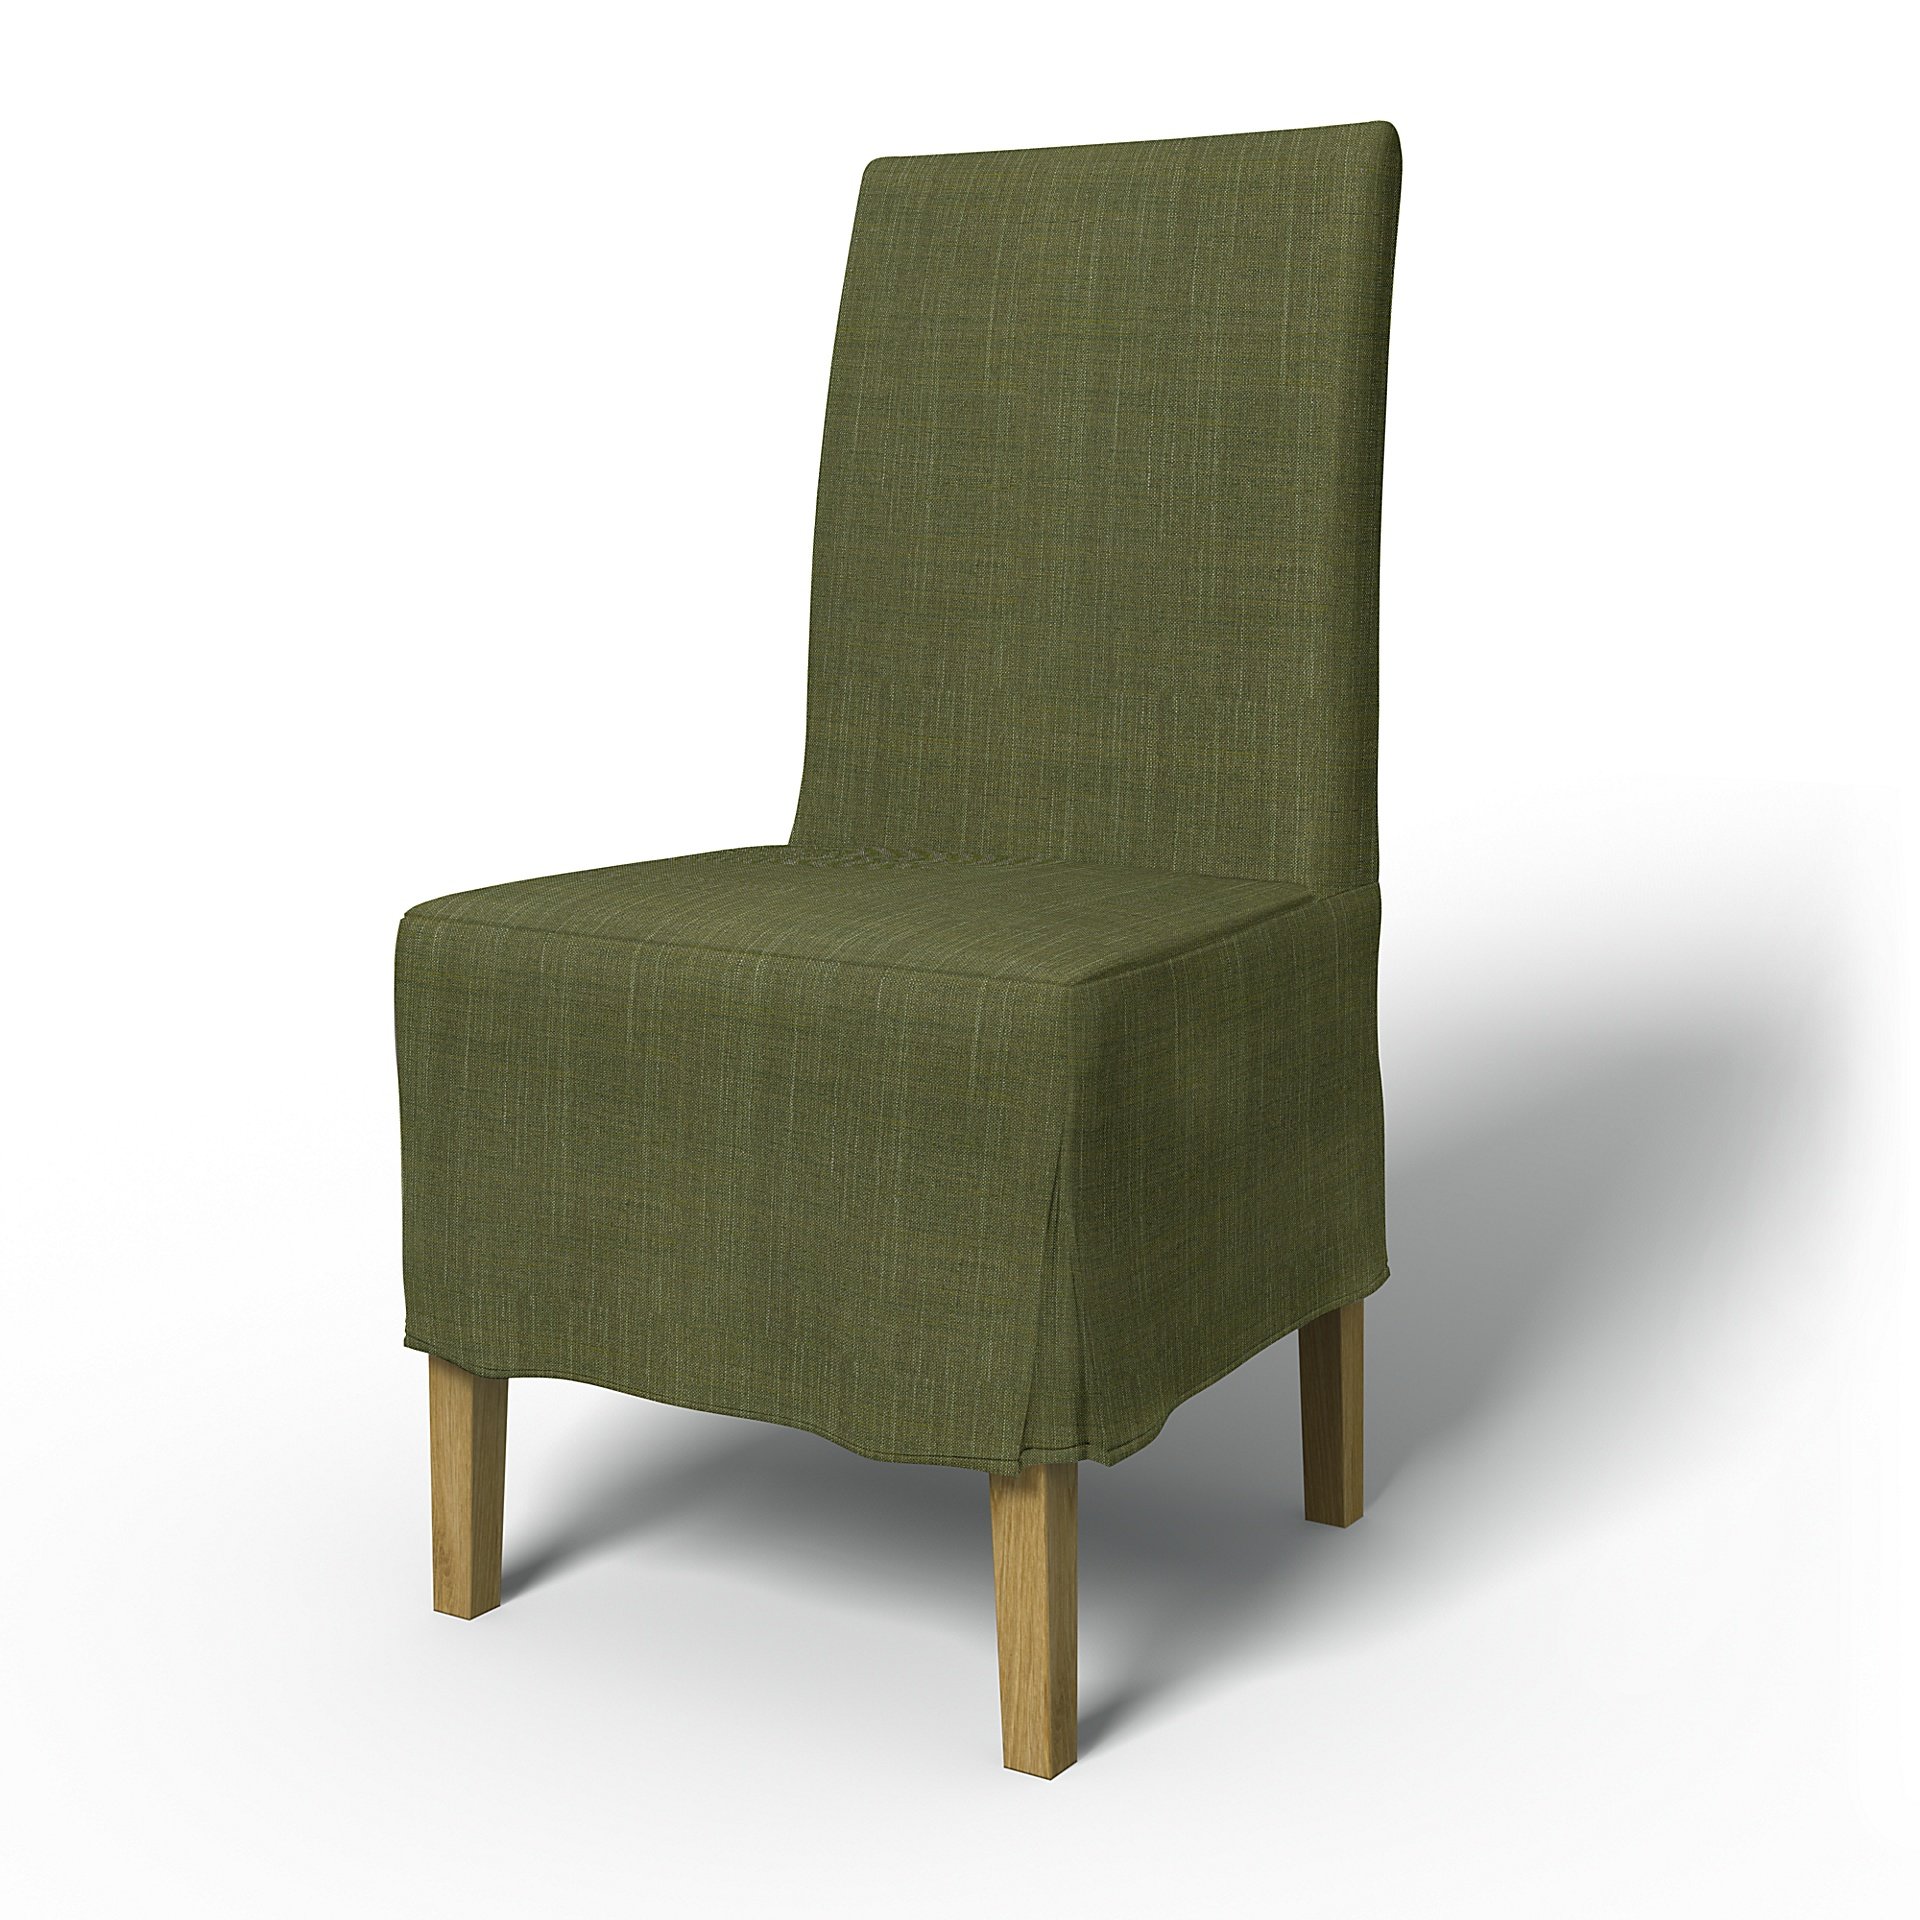 IKEA - Henriksdal Dining Chair Cover Medium skirt with Box Pleat (Standard model), Moss Green, Boucl